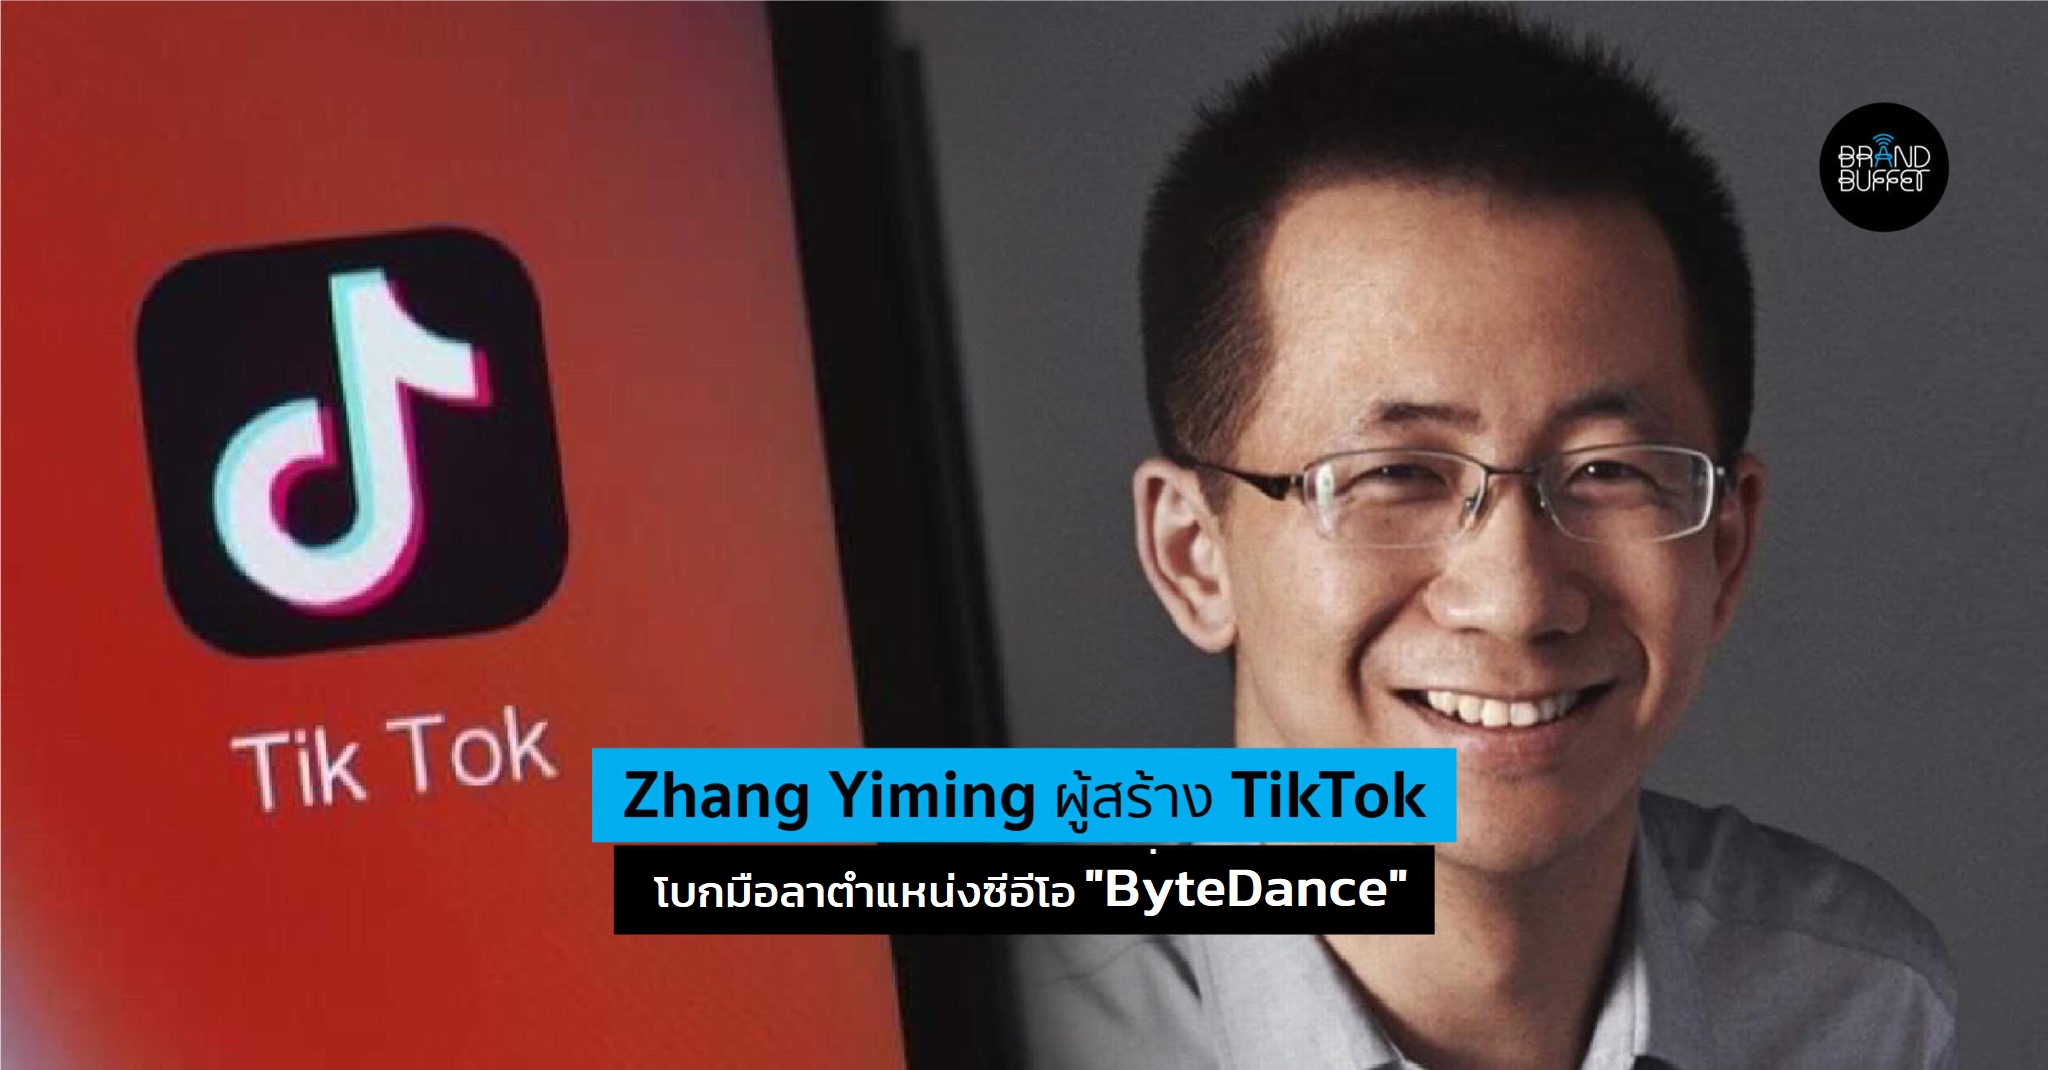 TikTok-Founder-zhang yimming